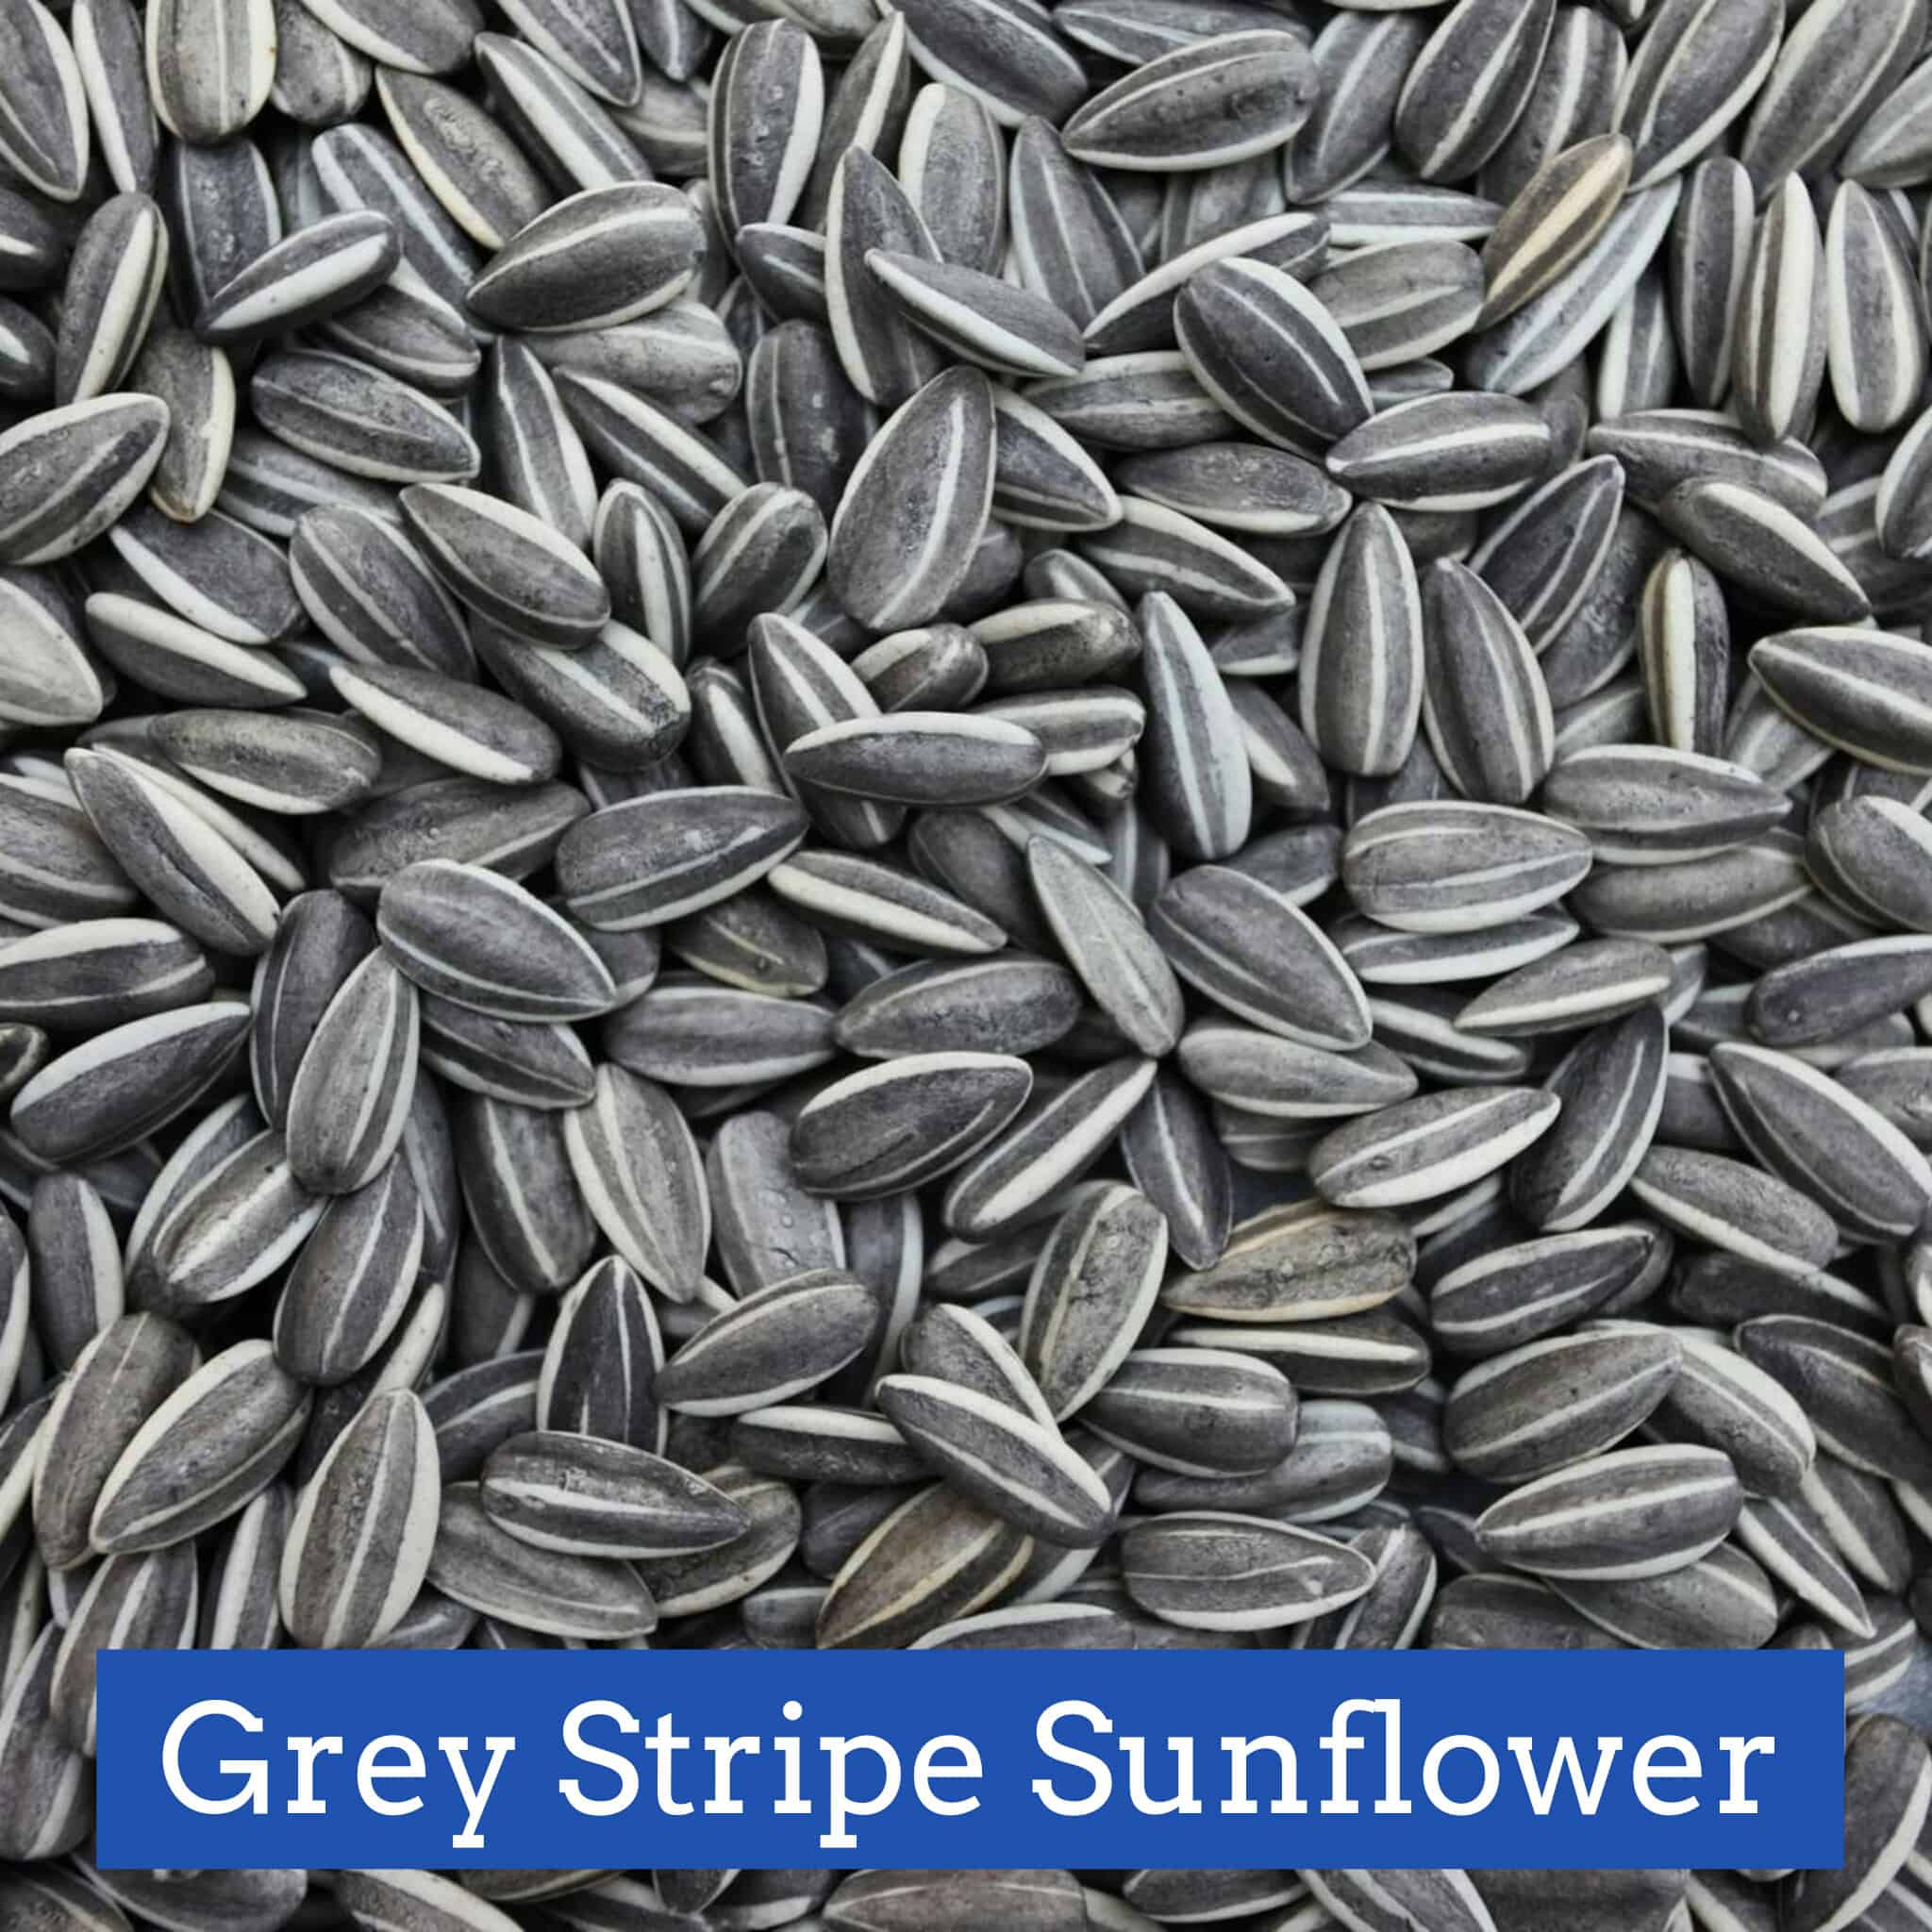 Grey Stripe Sunflower Seed 10lb